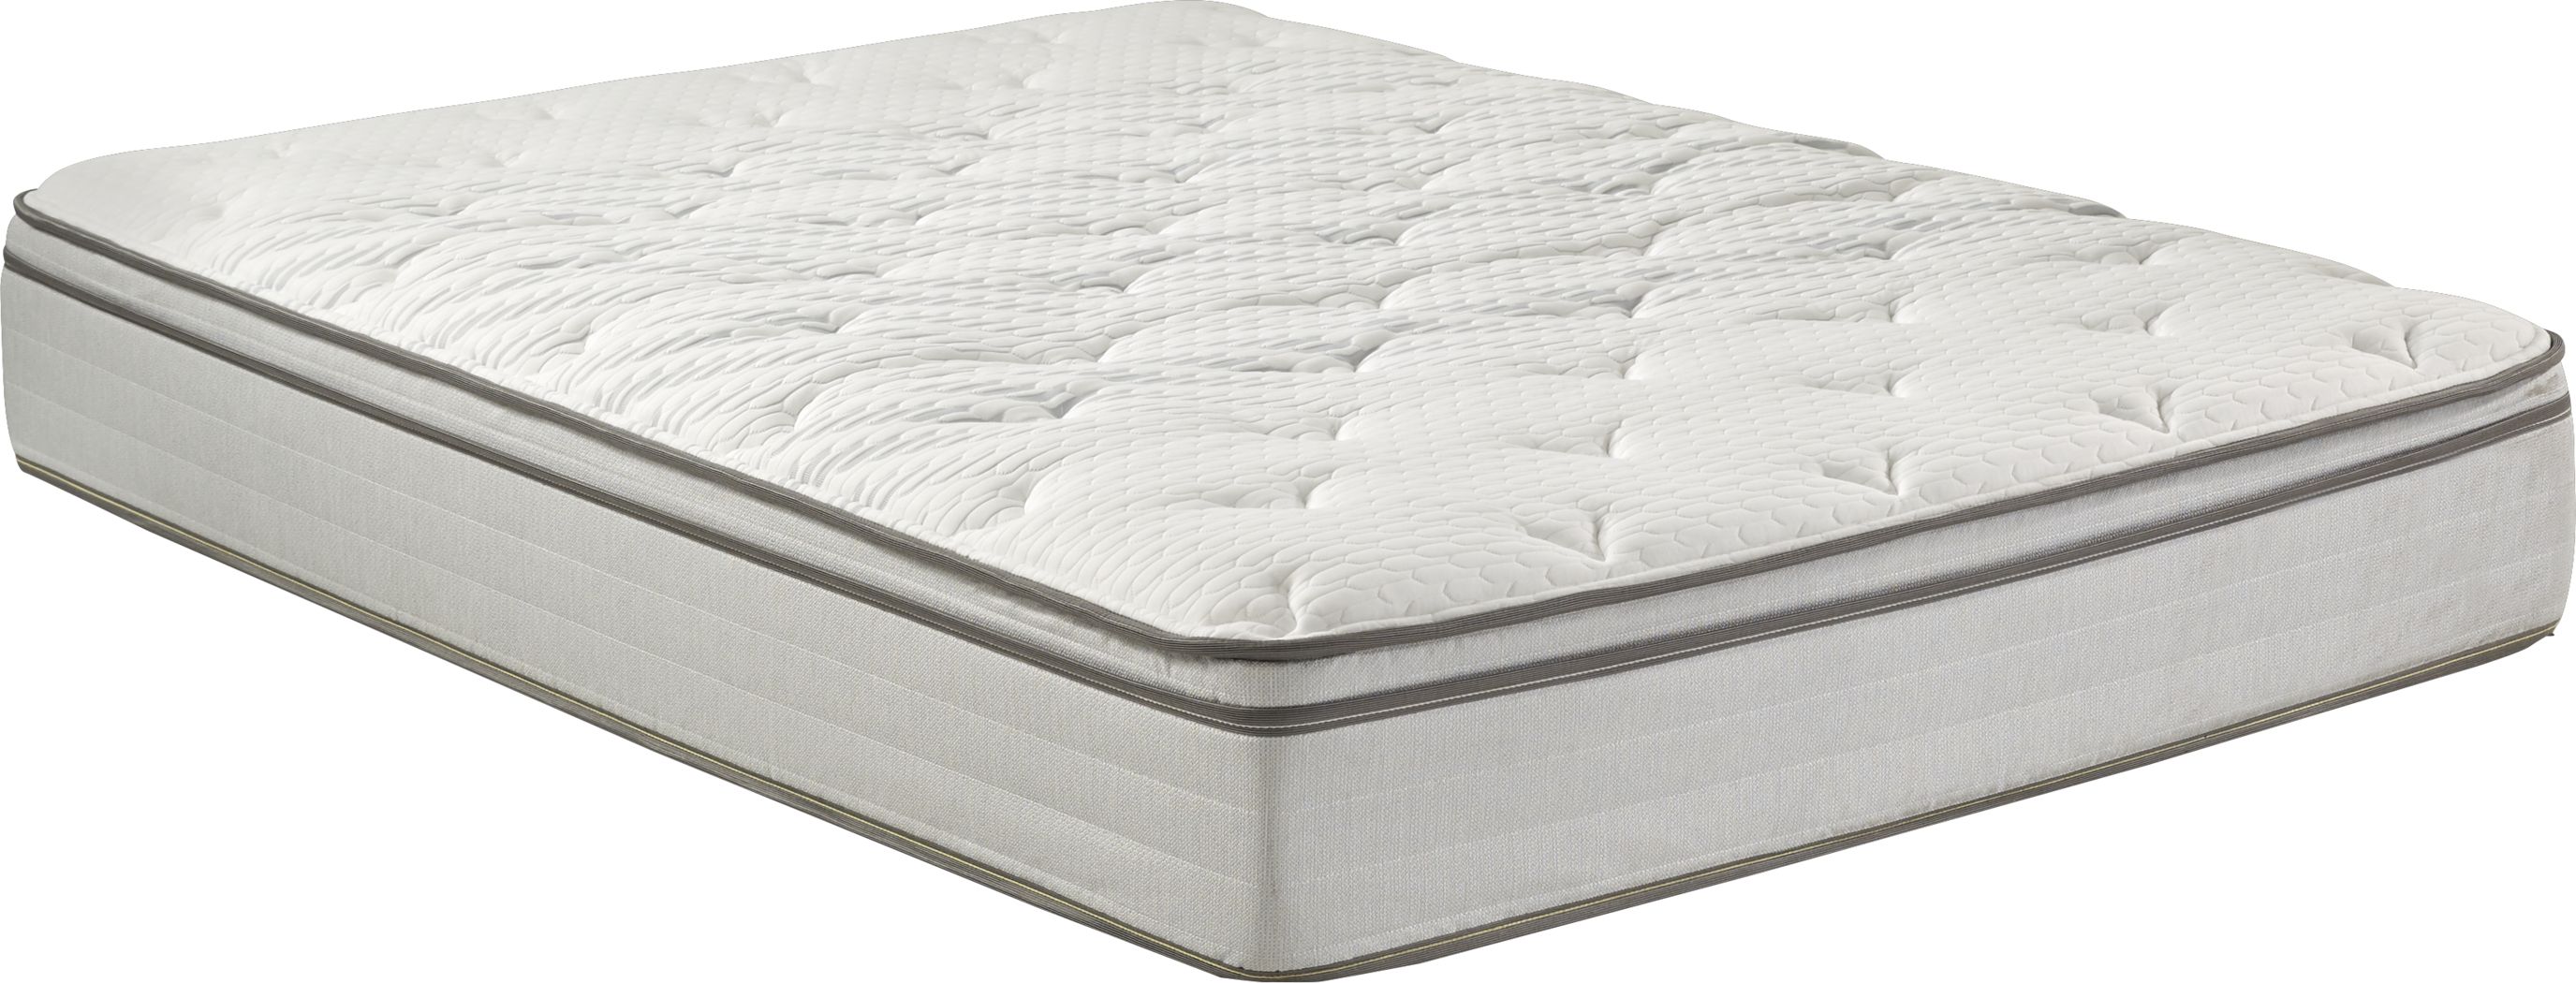 kingsdown twin mattress price